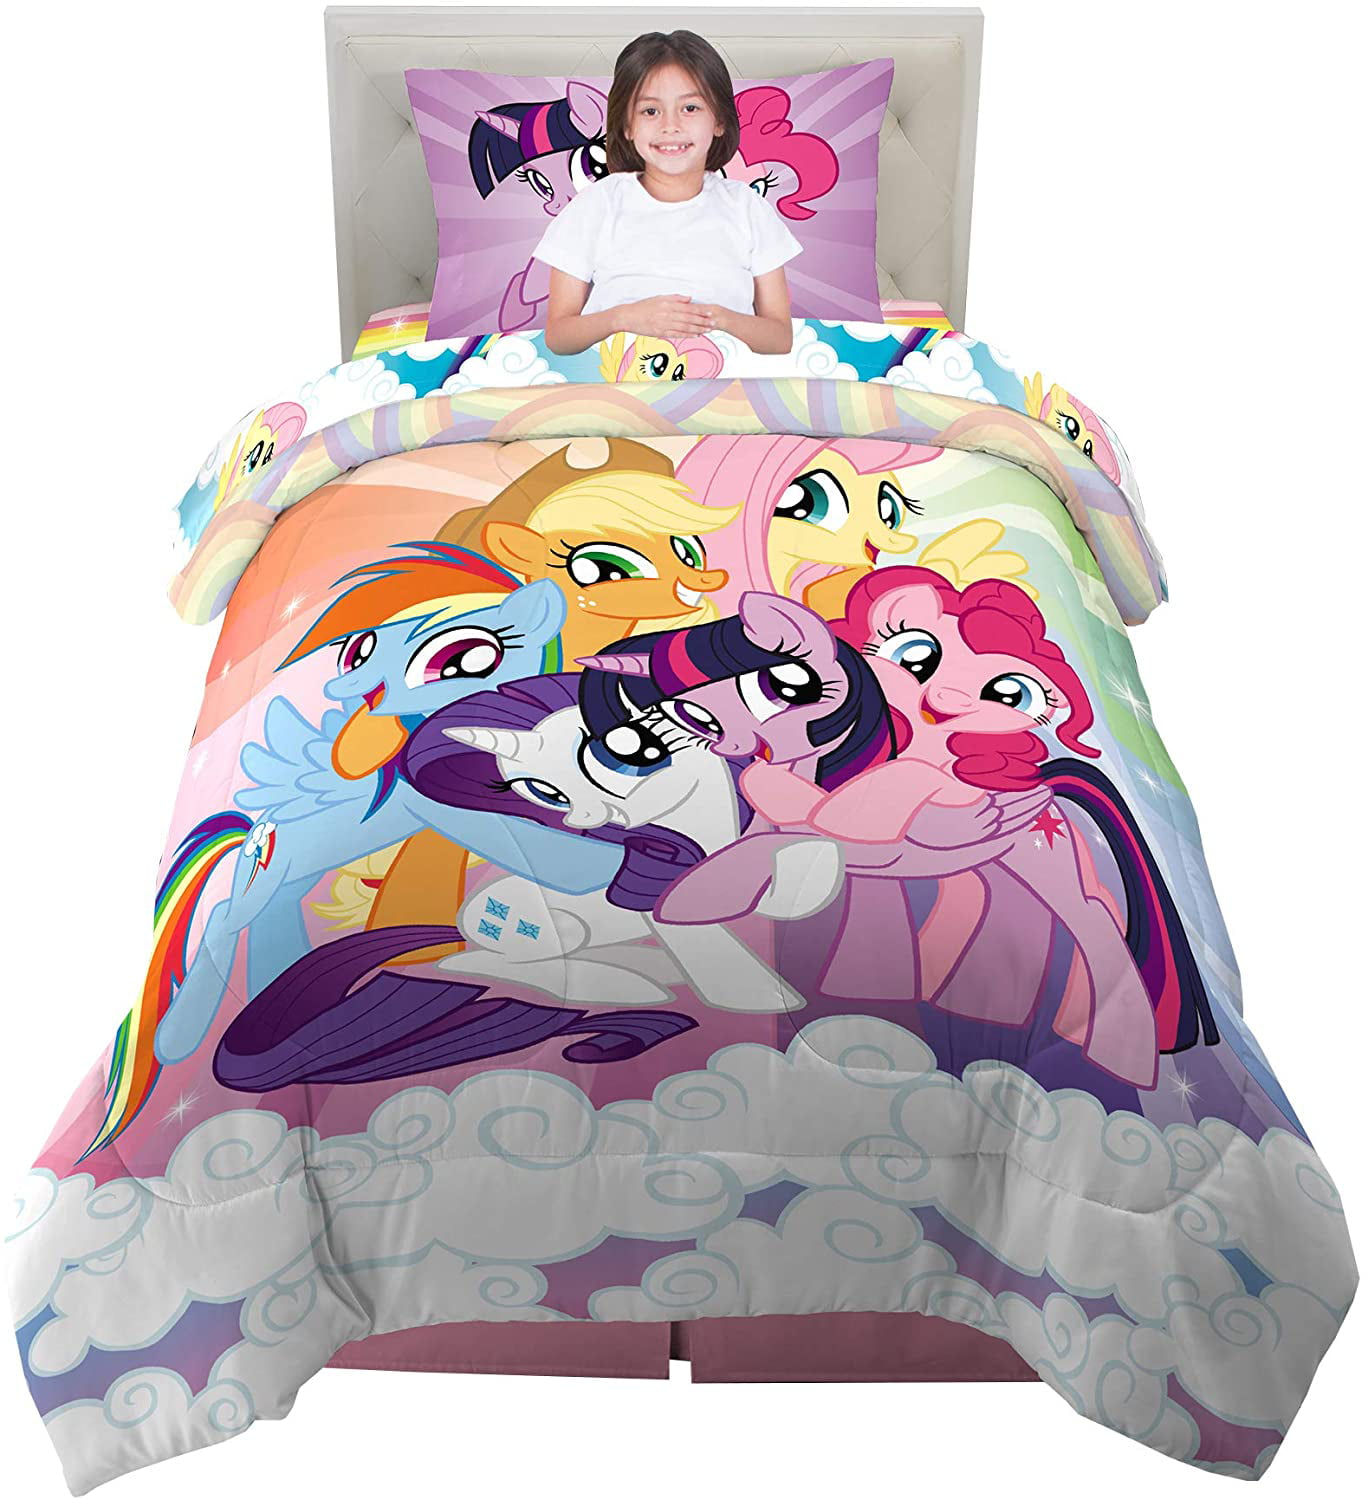 Franco Kids Bedding Super Soft Comforter and Sheet Set 4 Piece Twin Size WWE 